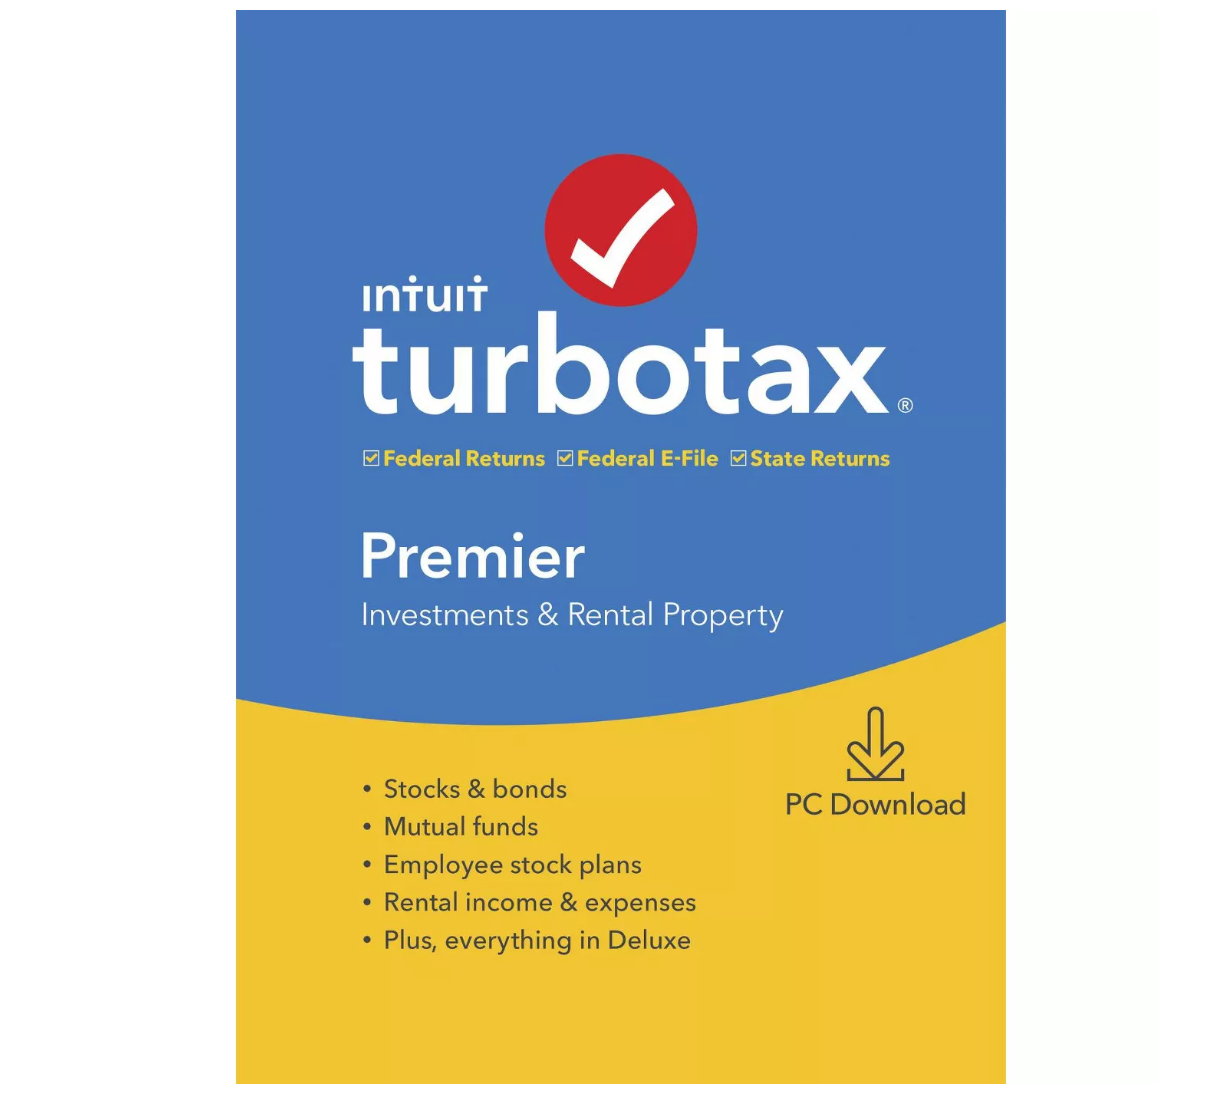 costco turbotax download 2016